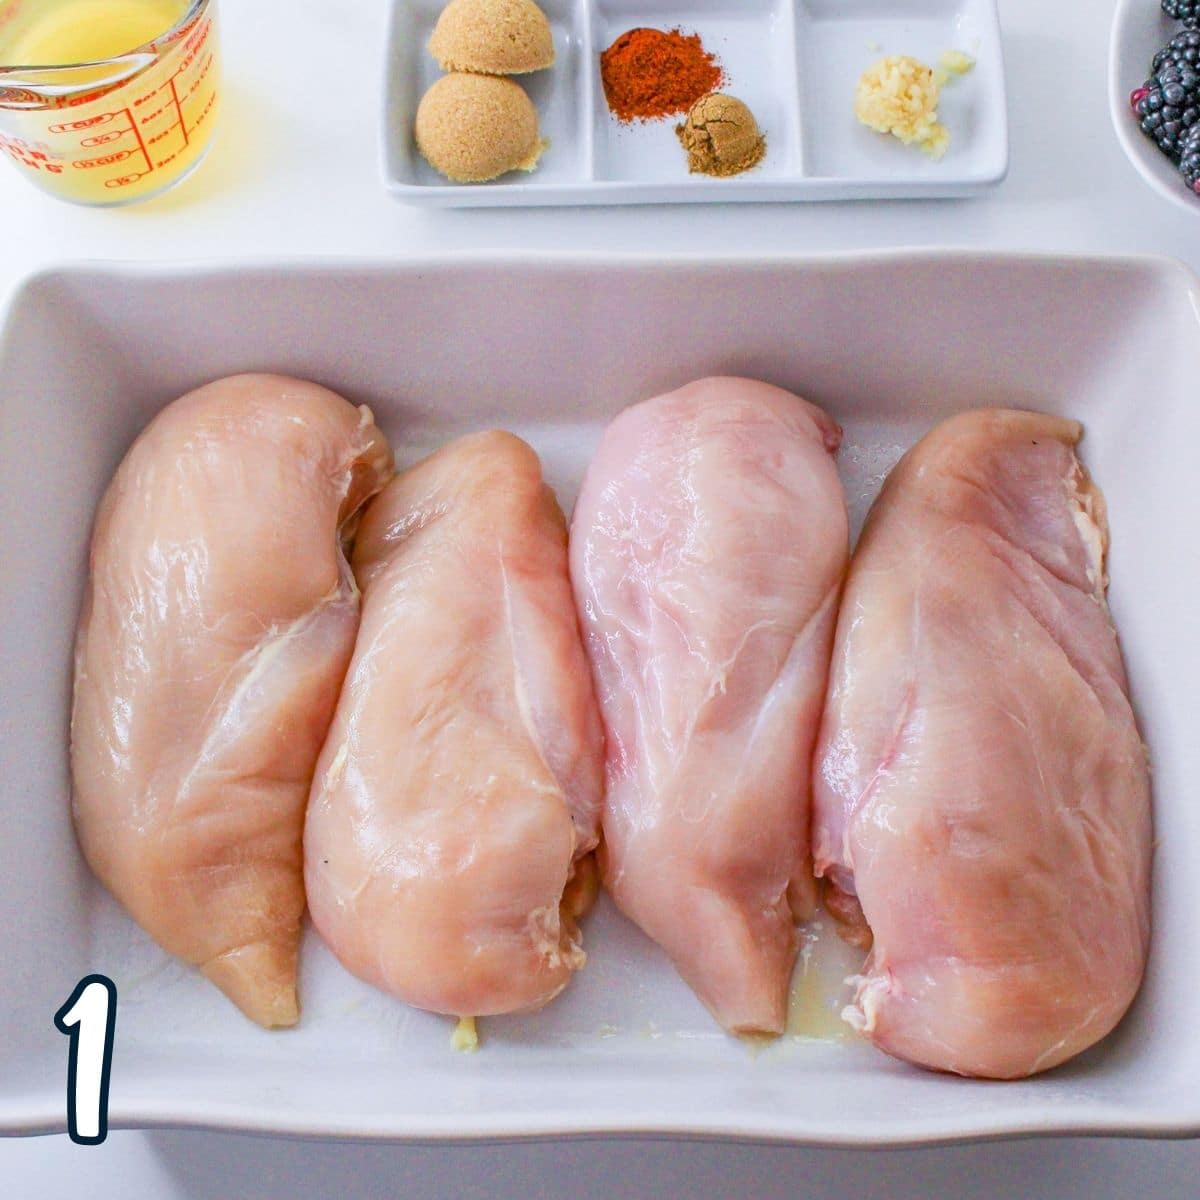 Raw chicken breasts in a casserole dish. 